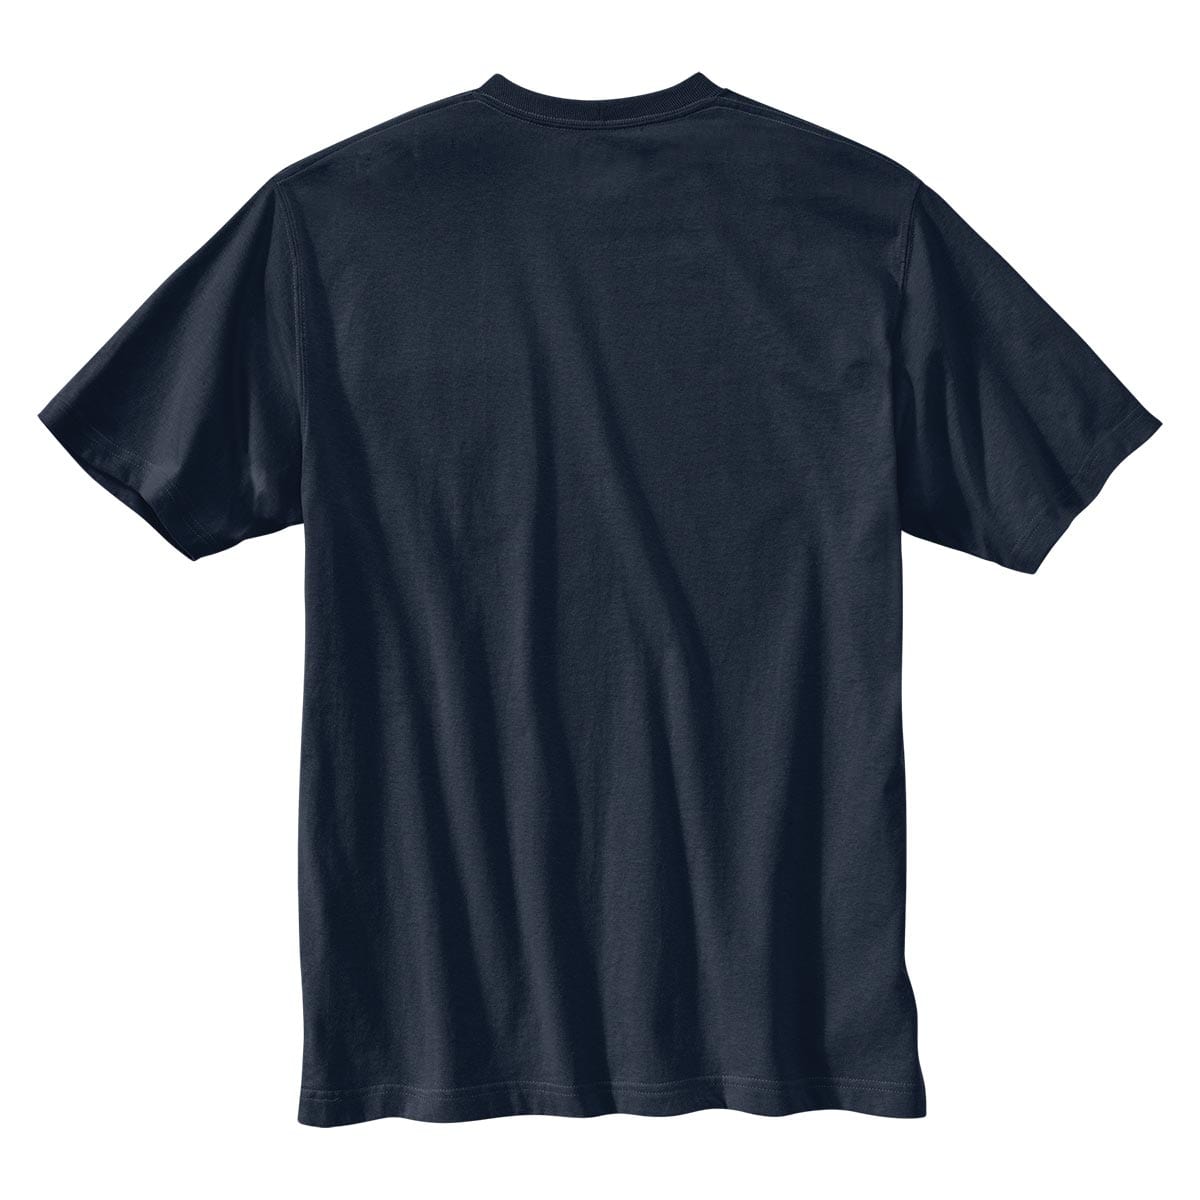 Carhartt Relaxed Fit Heavyweight Short Sleeve Camp Graphic T-Shirt